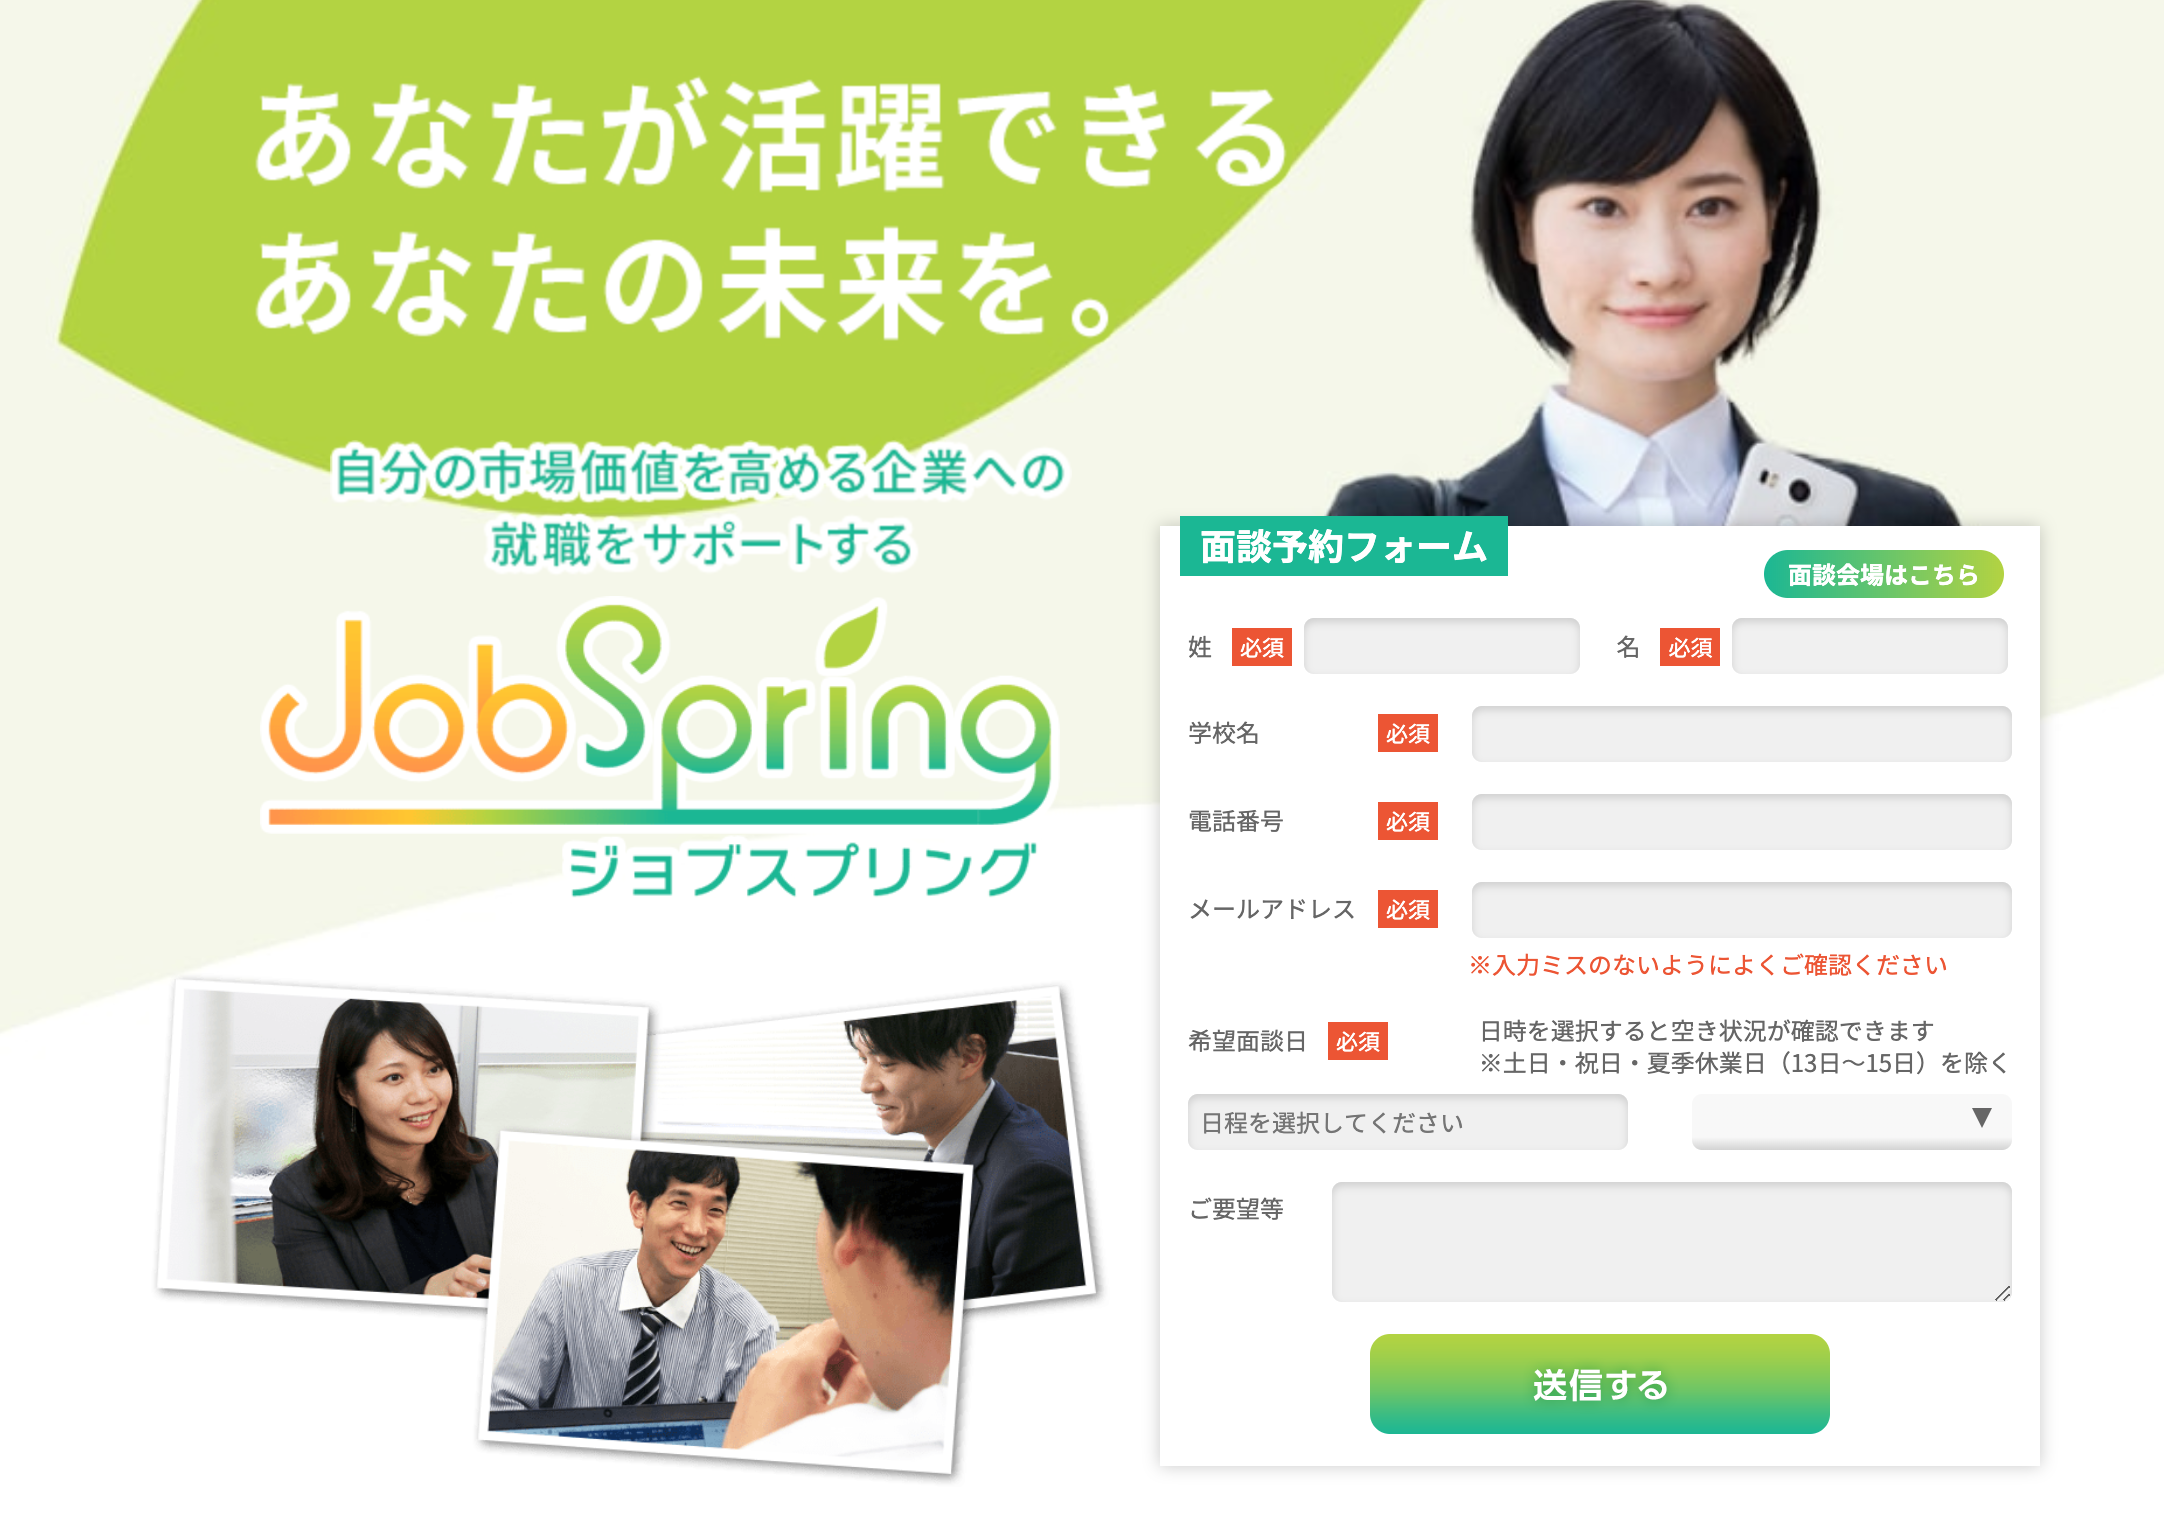 JobSpring